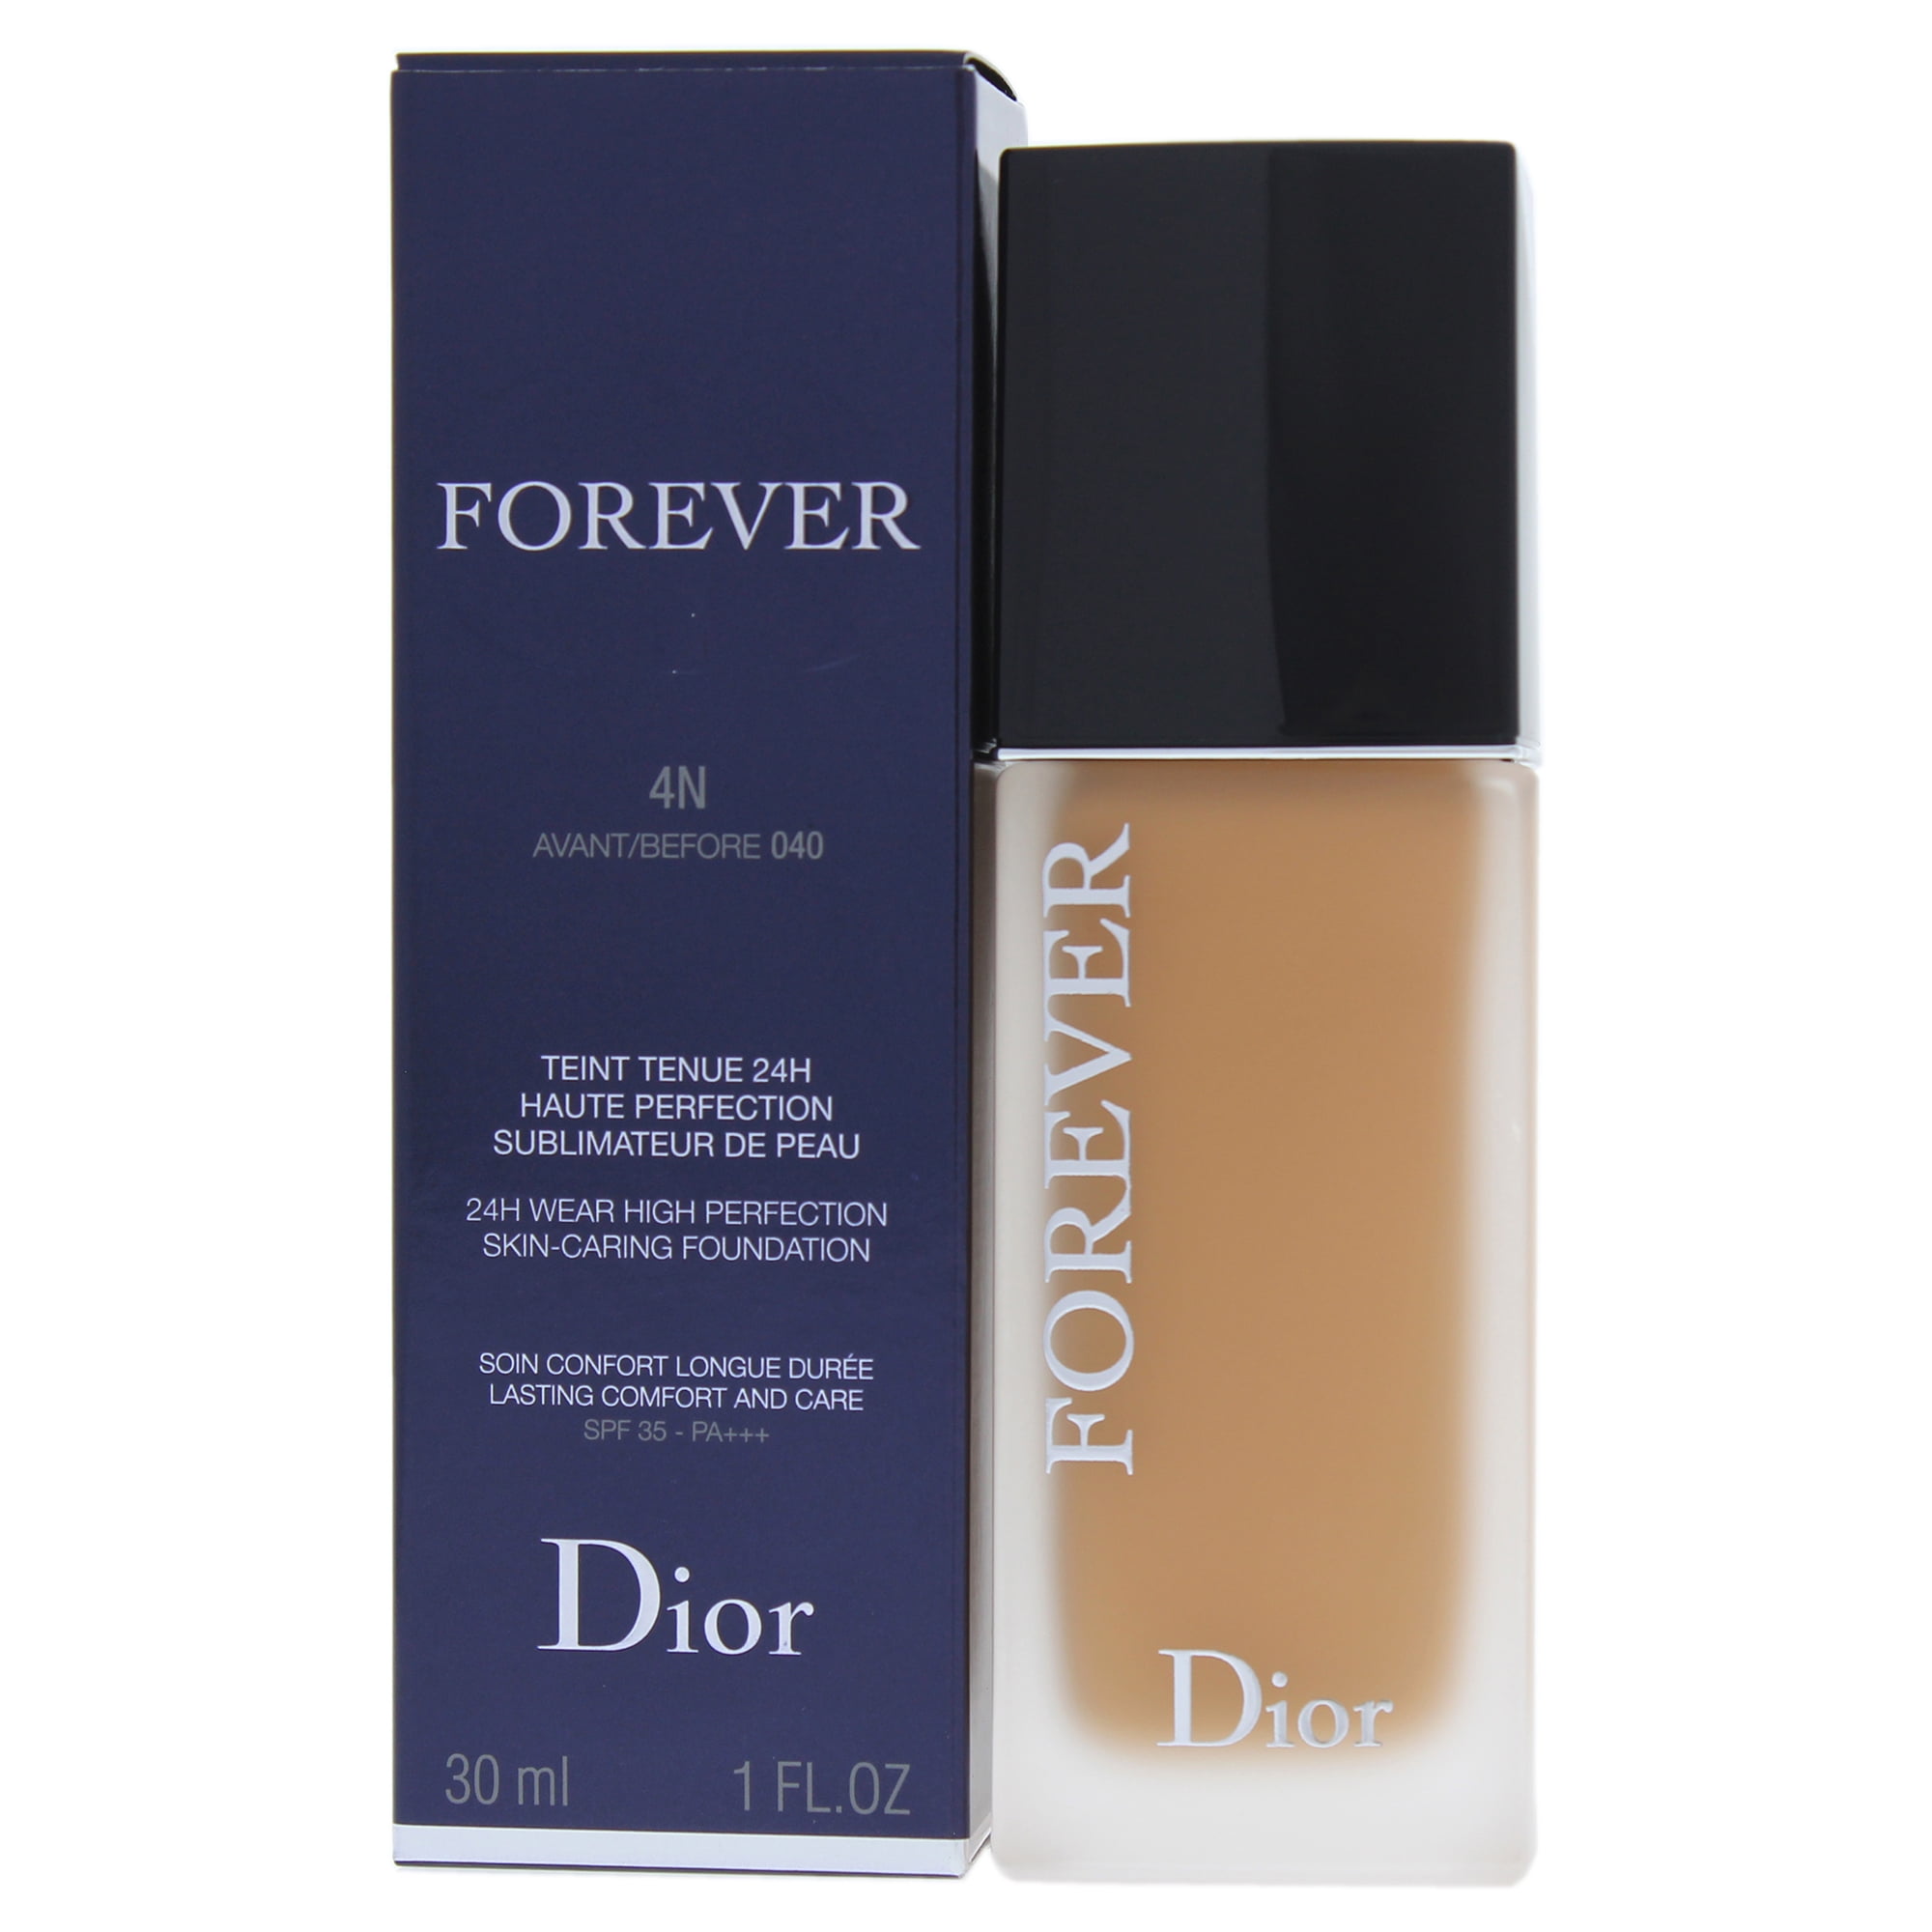 Dior Forever Foundation SPF 35 - 4N 